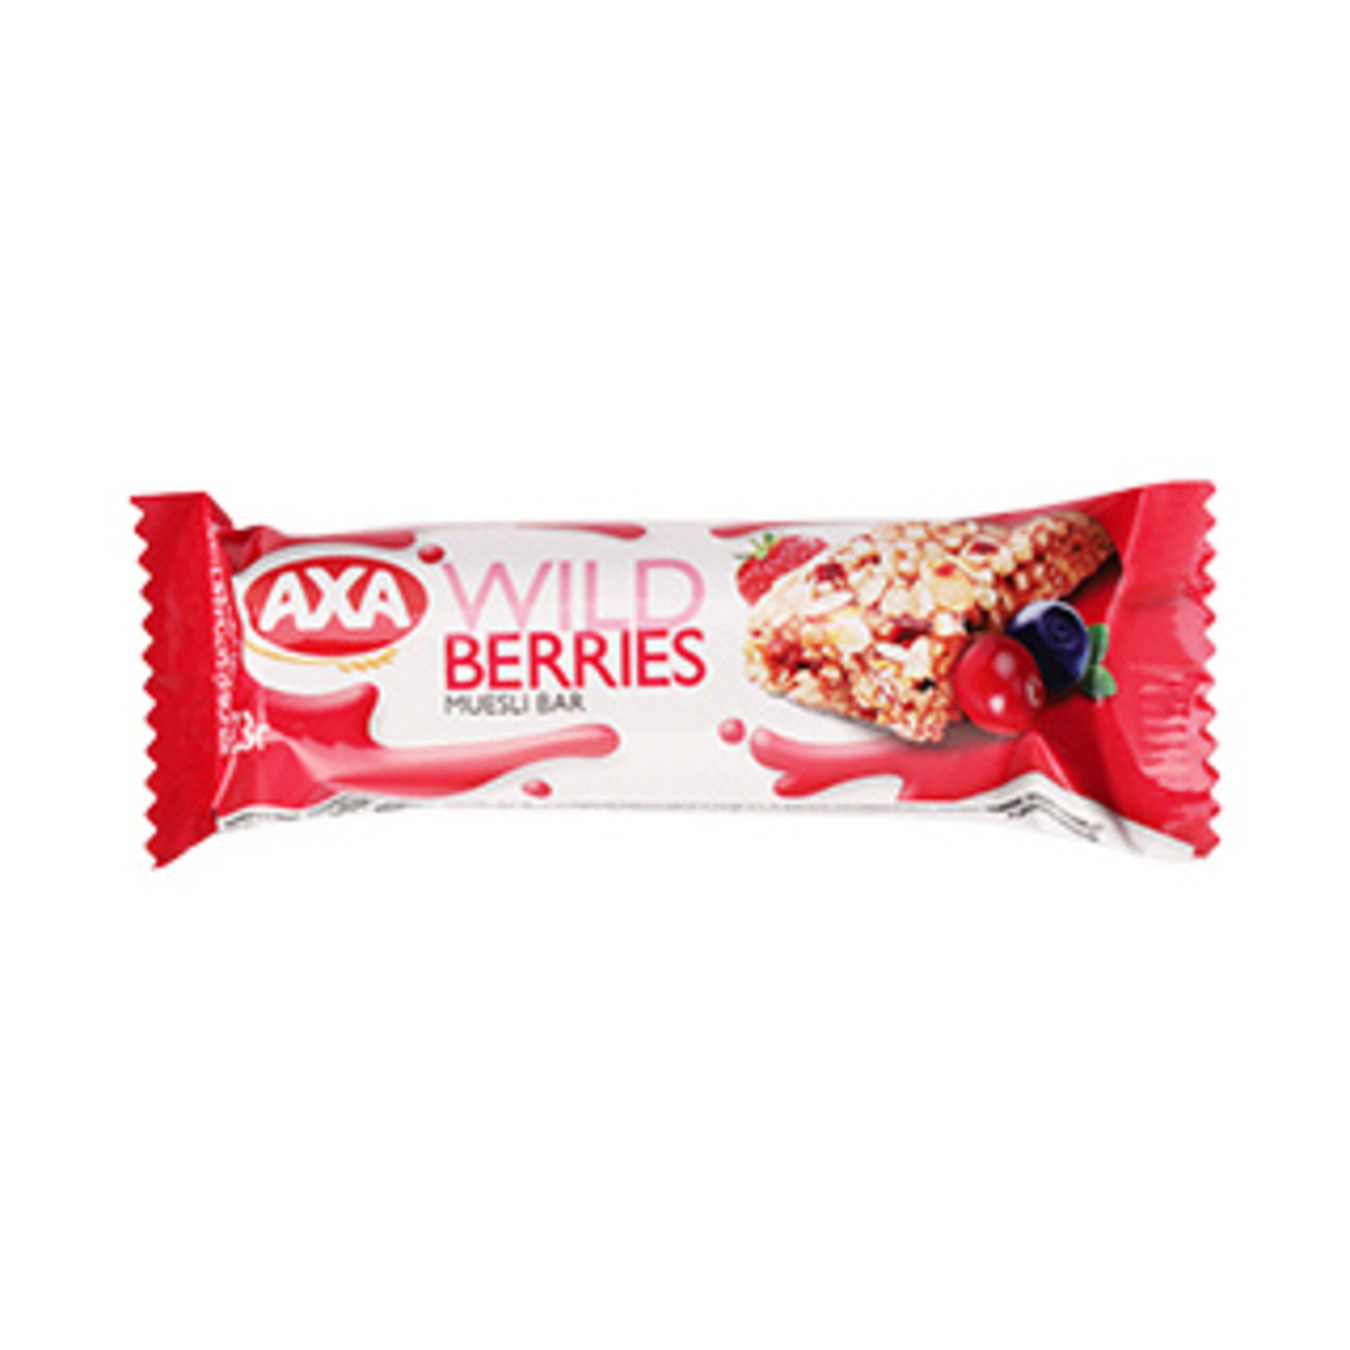 AXA With Wild Berries Filling Grain Bar 23g